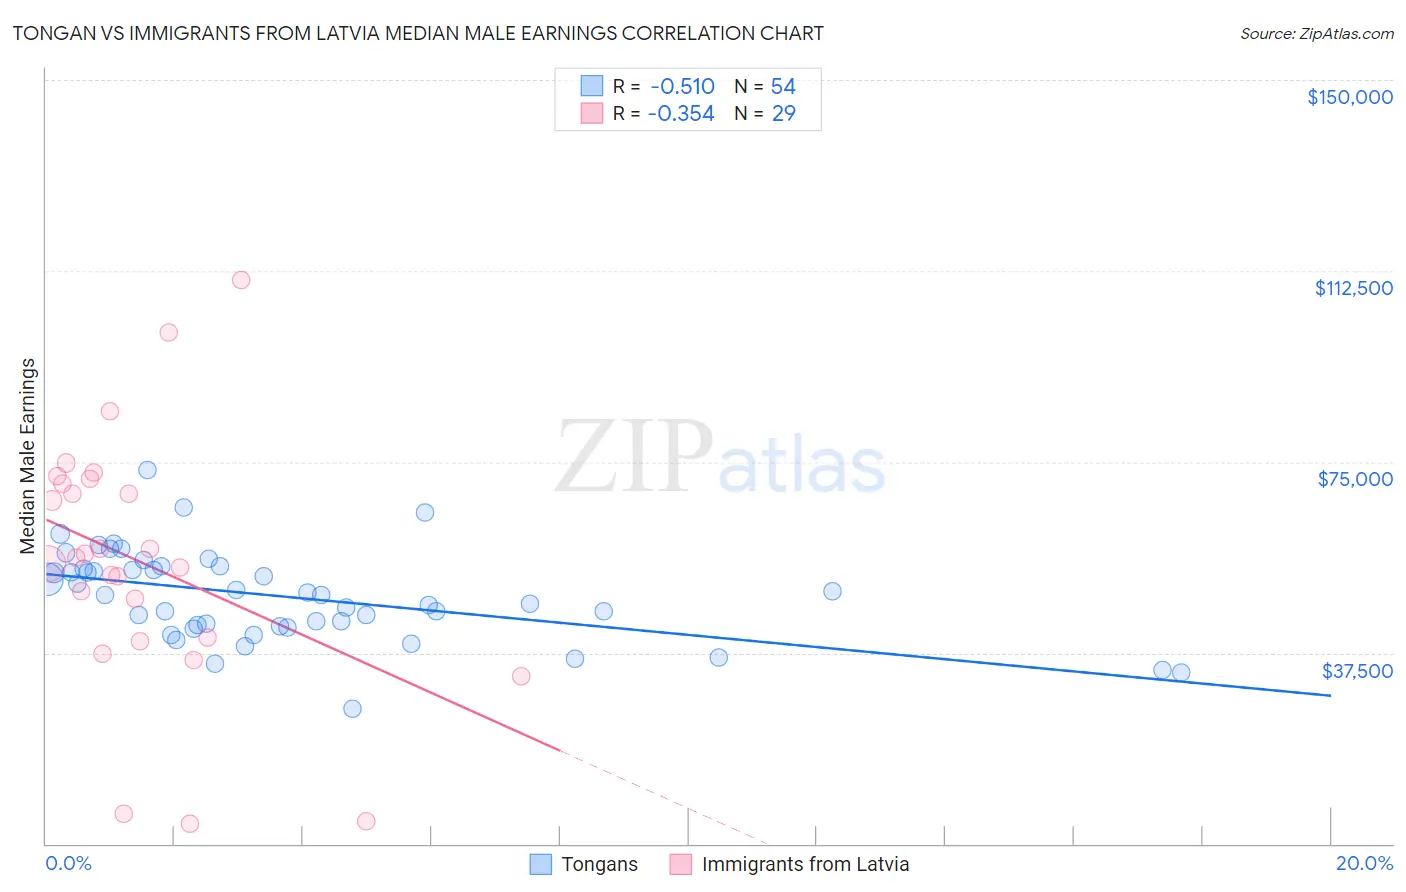 Tongan vs Immigrants from Latvia Median Male Earnings